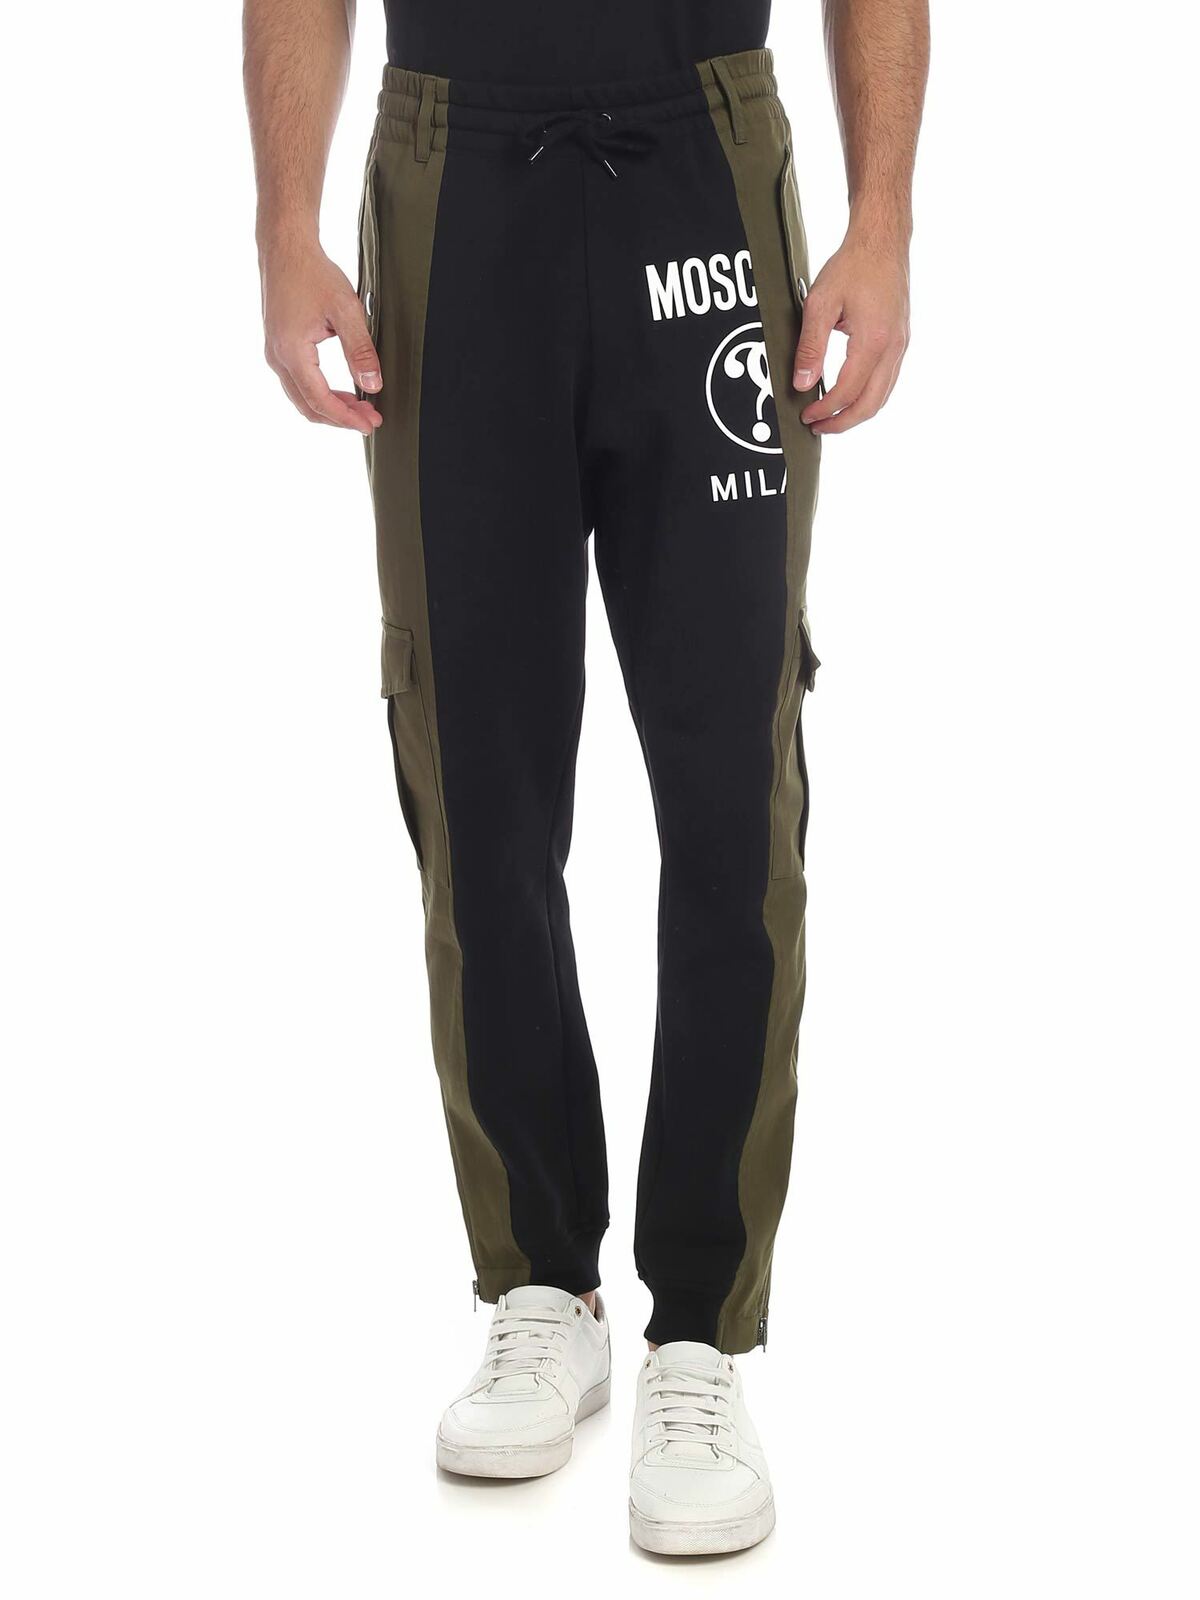 Moschino zip-pocket cargo shorts - Green